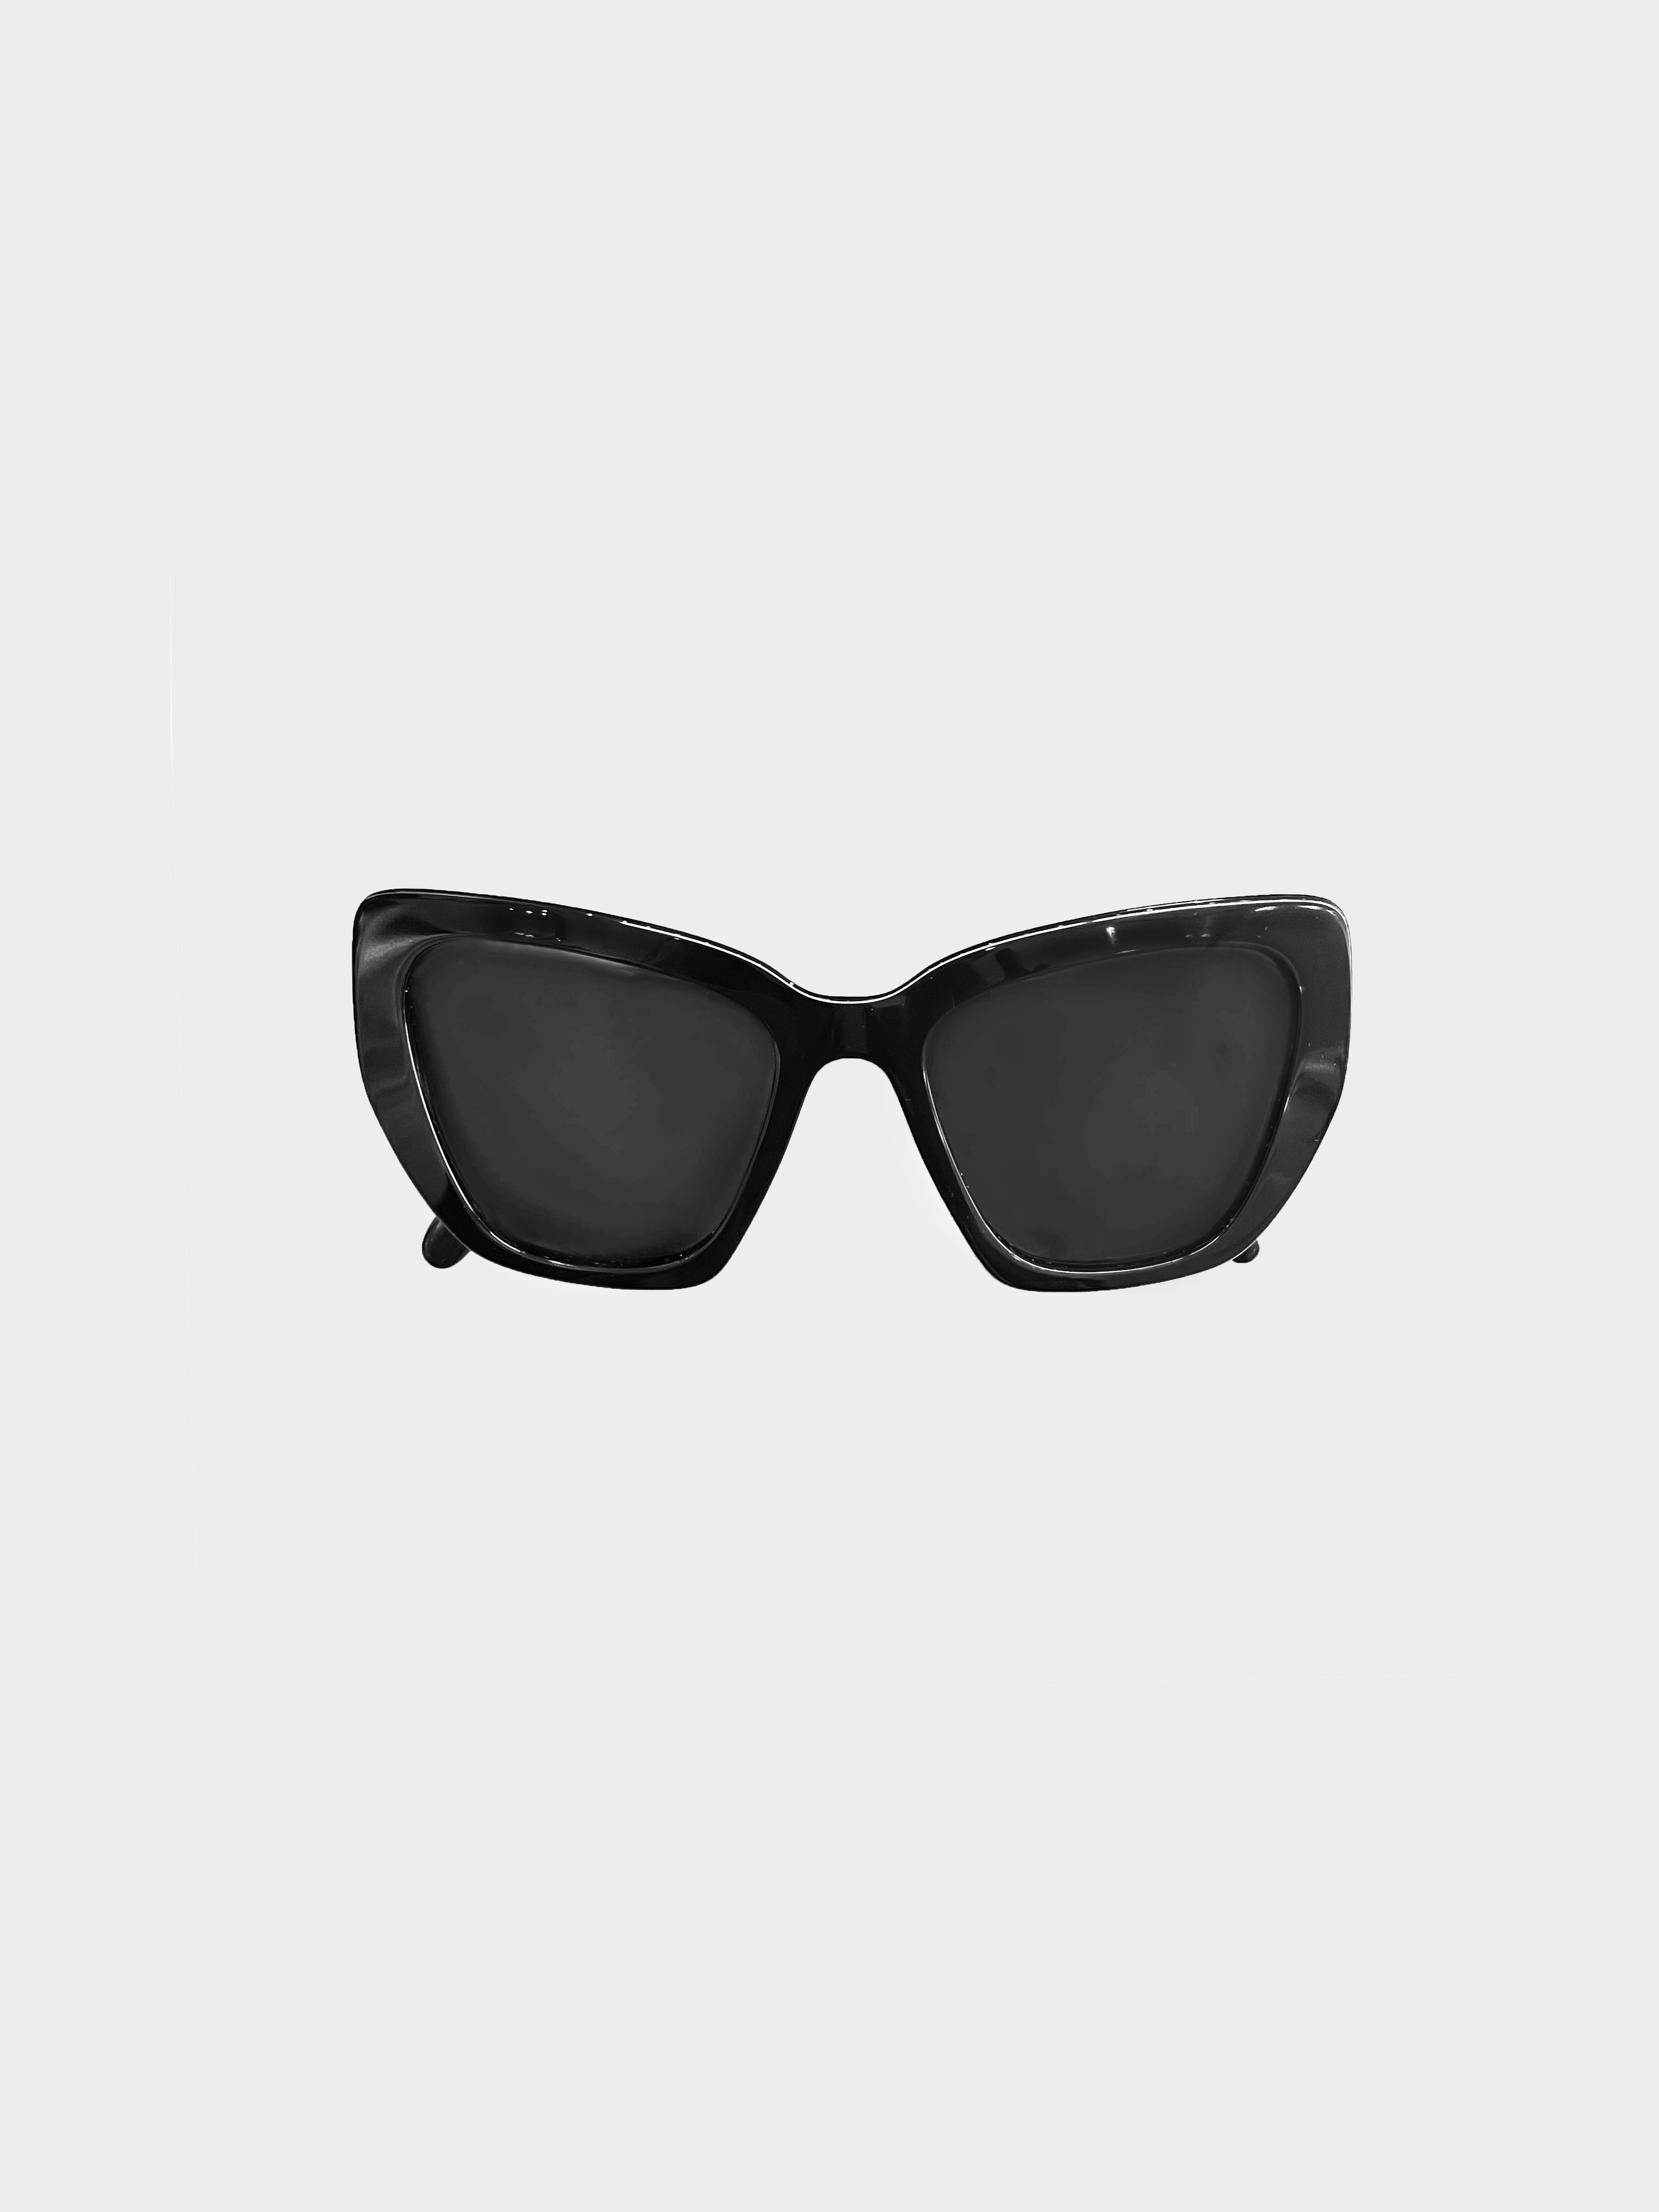 Prada 2010s Black Cat Eye Sunglasses